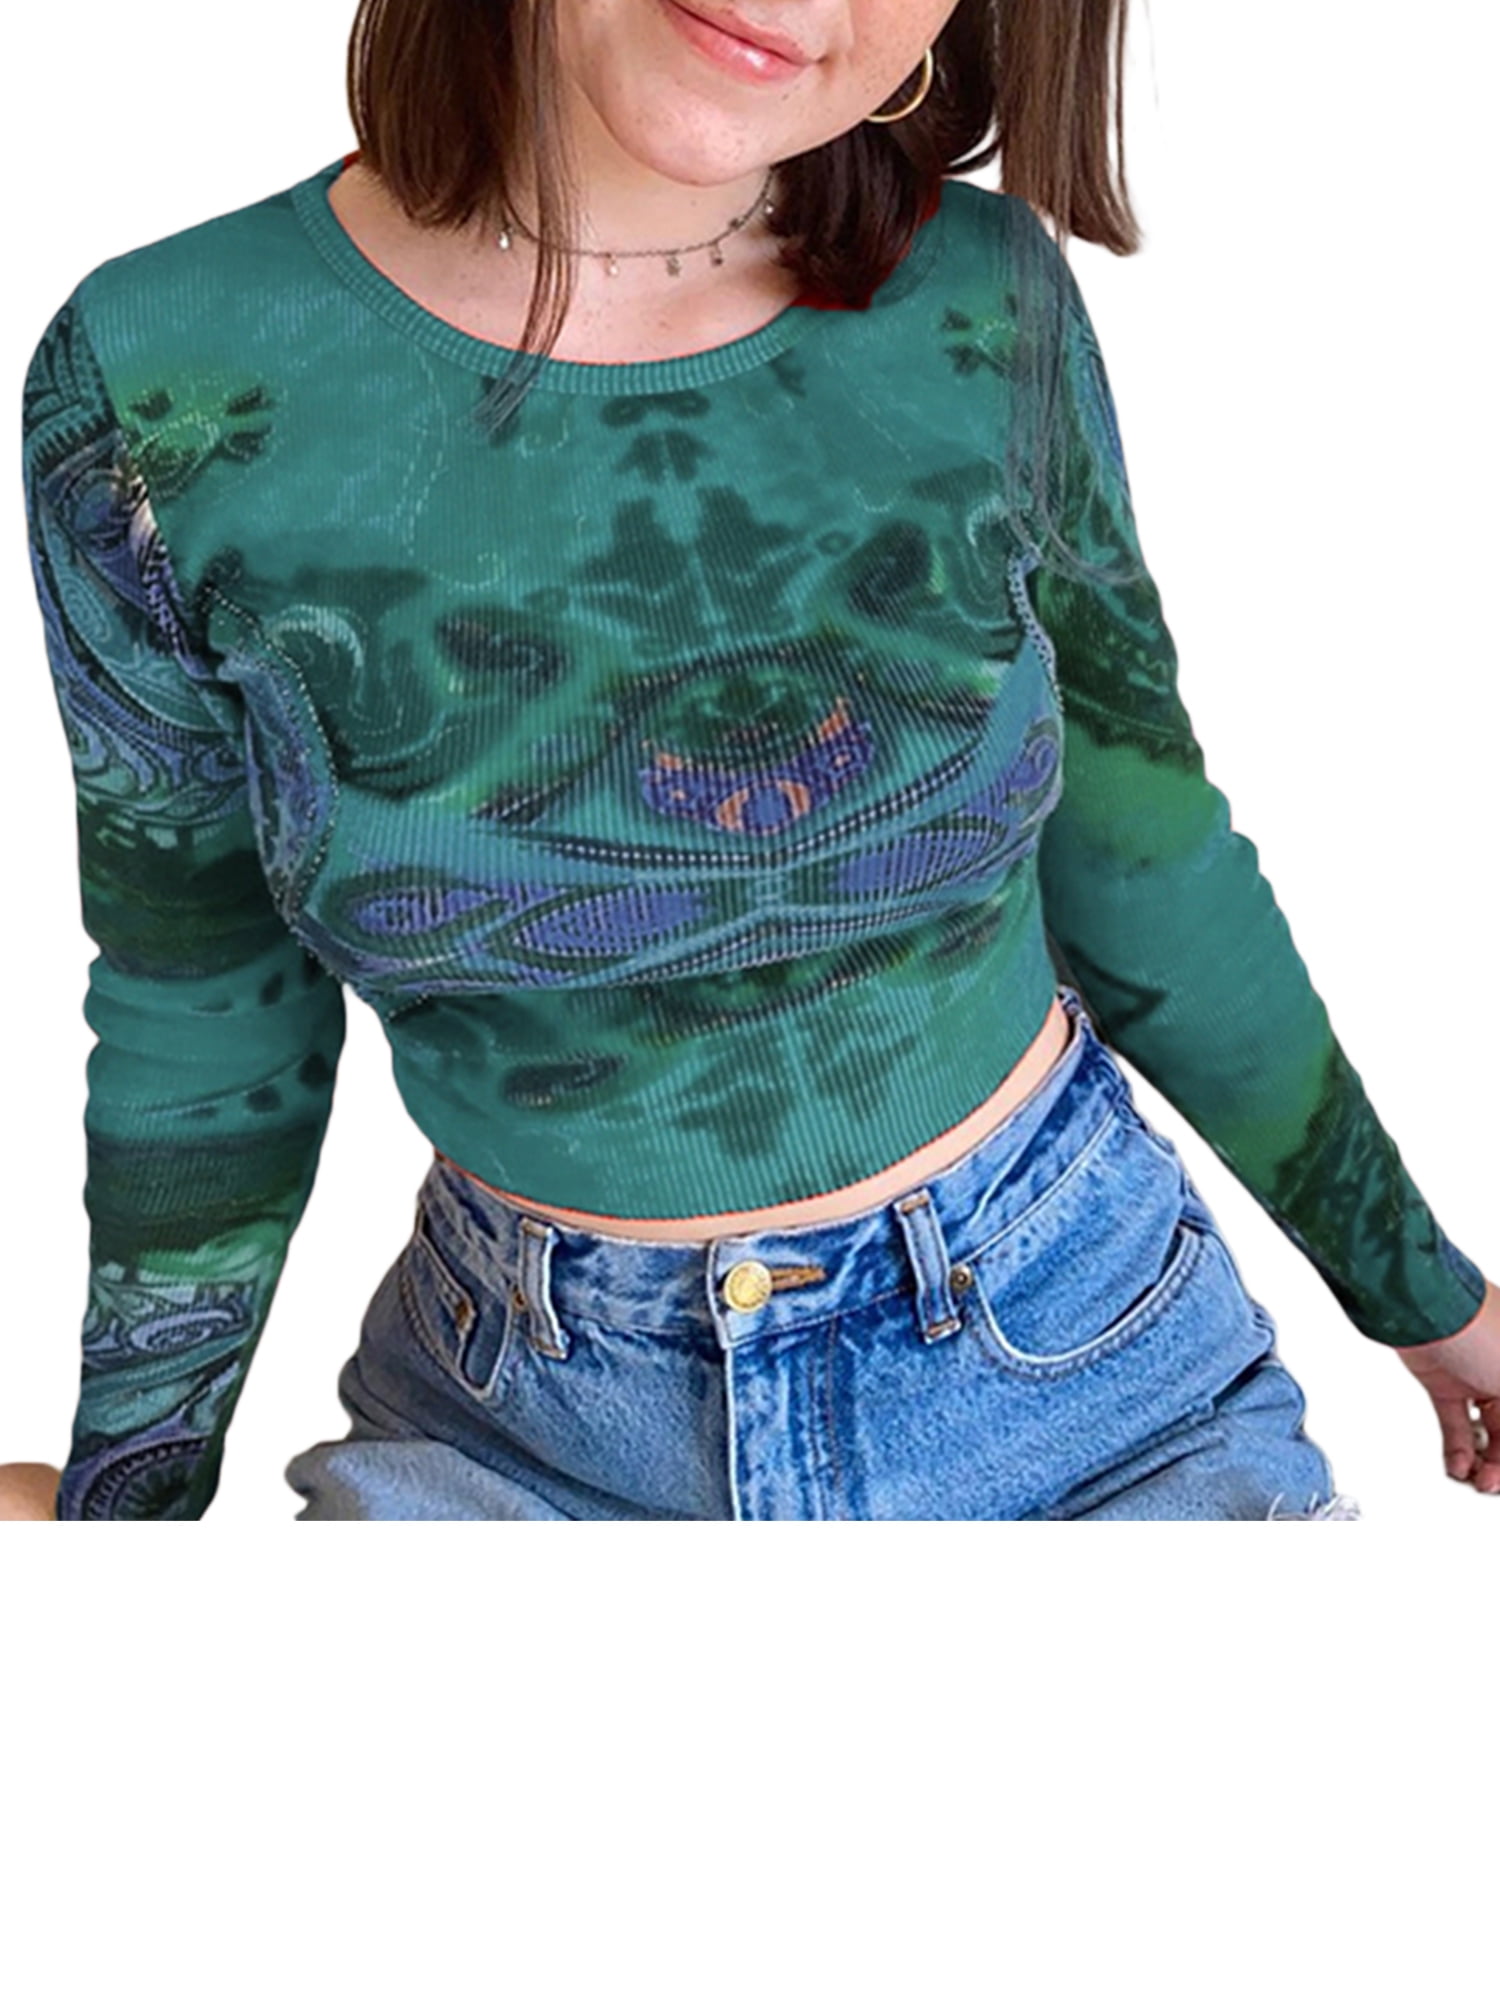 NWT Justice Girls Size 8 Tie Dye Corduroy Skinny Pants & Tee Shirt Top 2-PC SET 